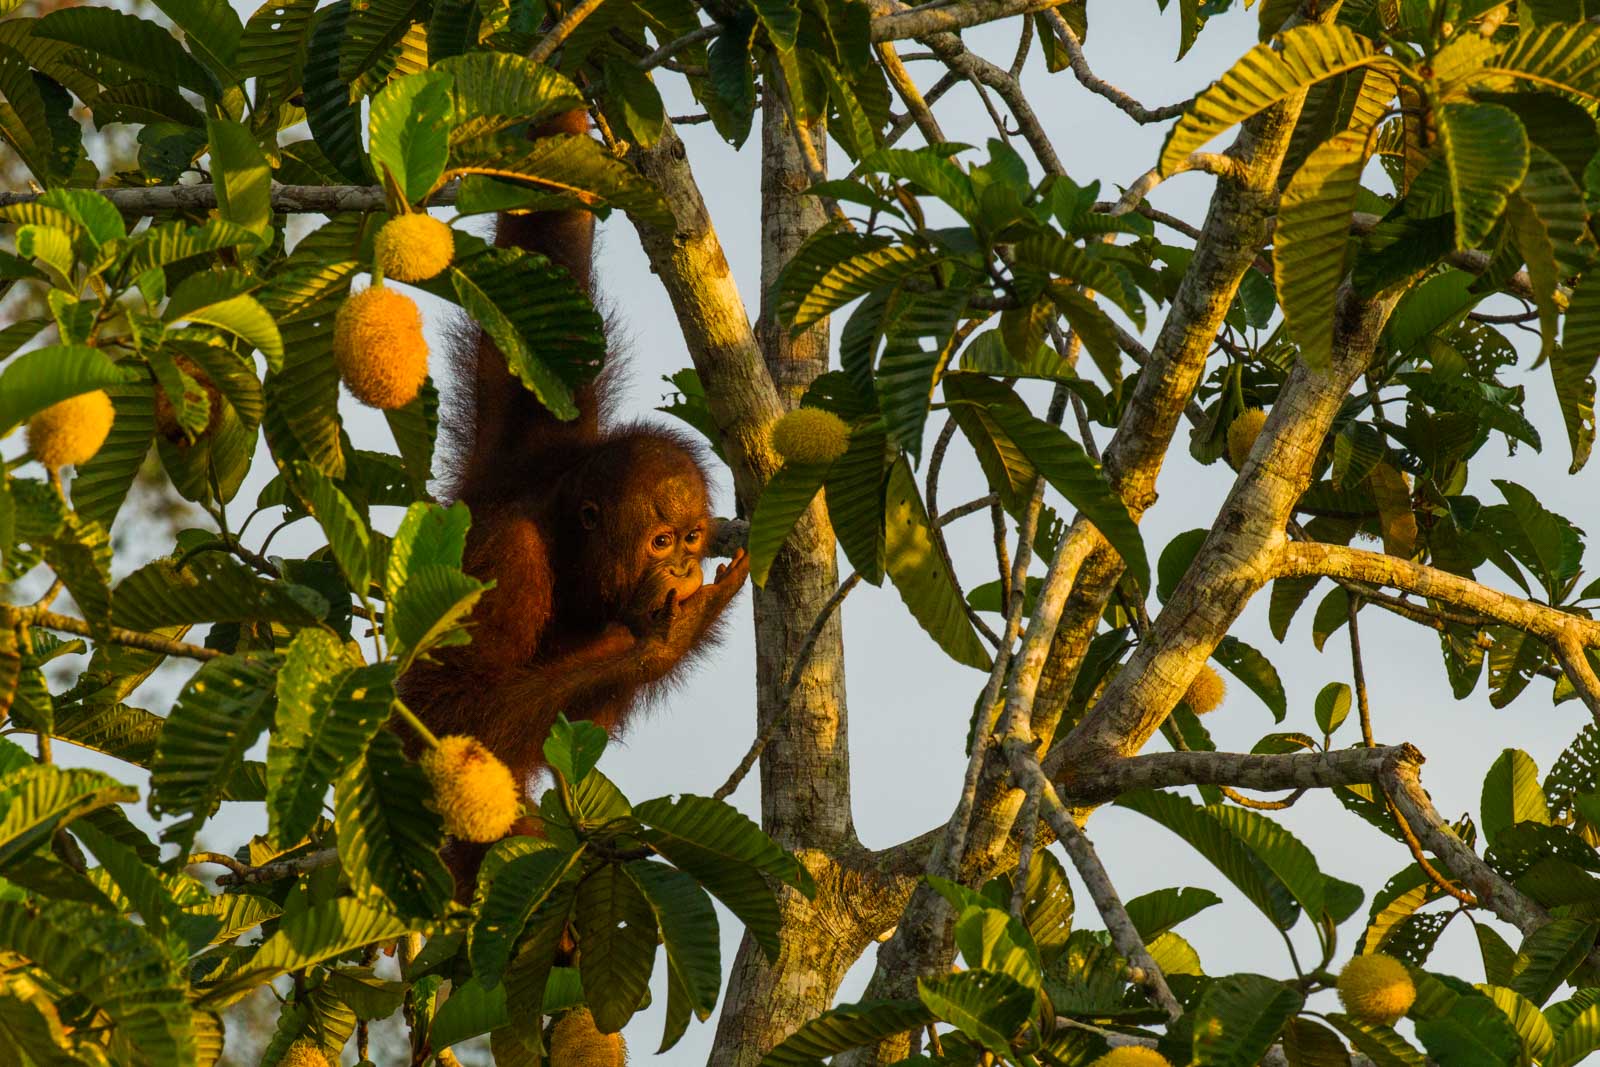 Orangutan during our Cats of Borneo Photo Tour